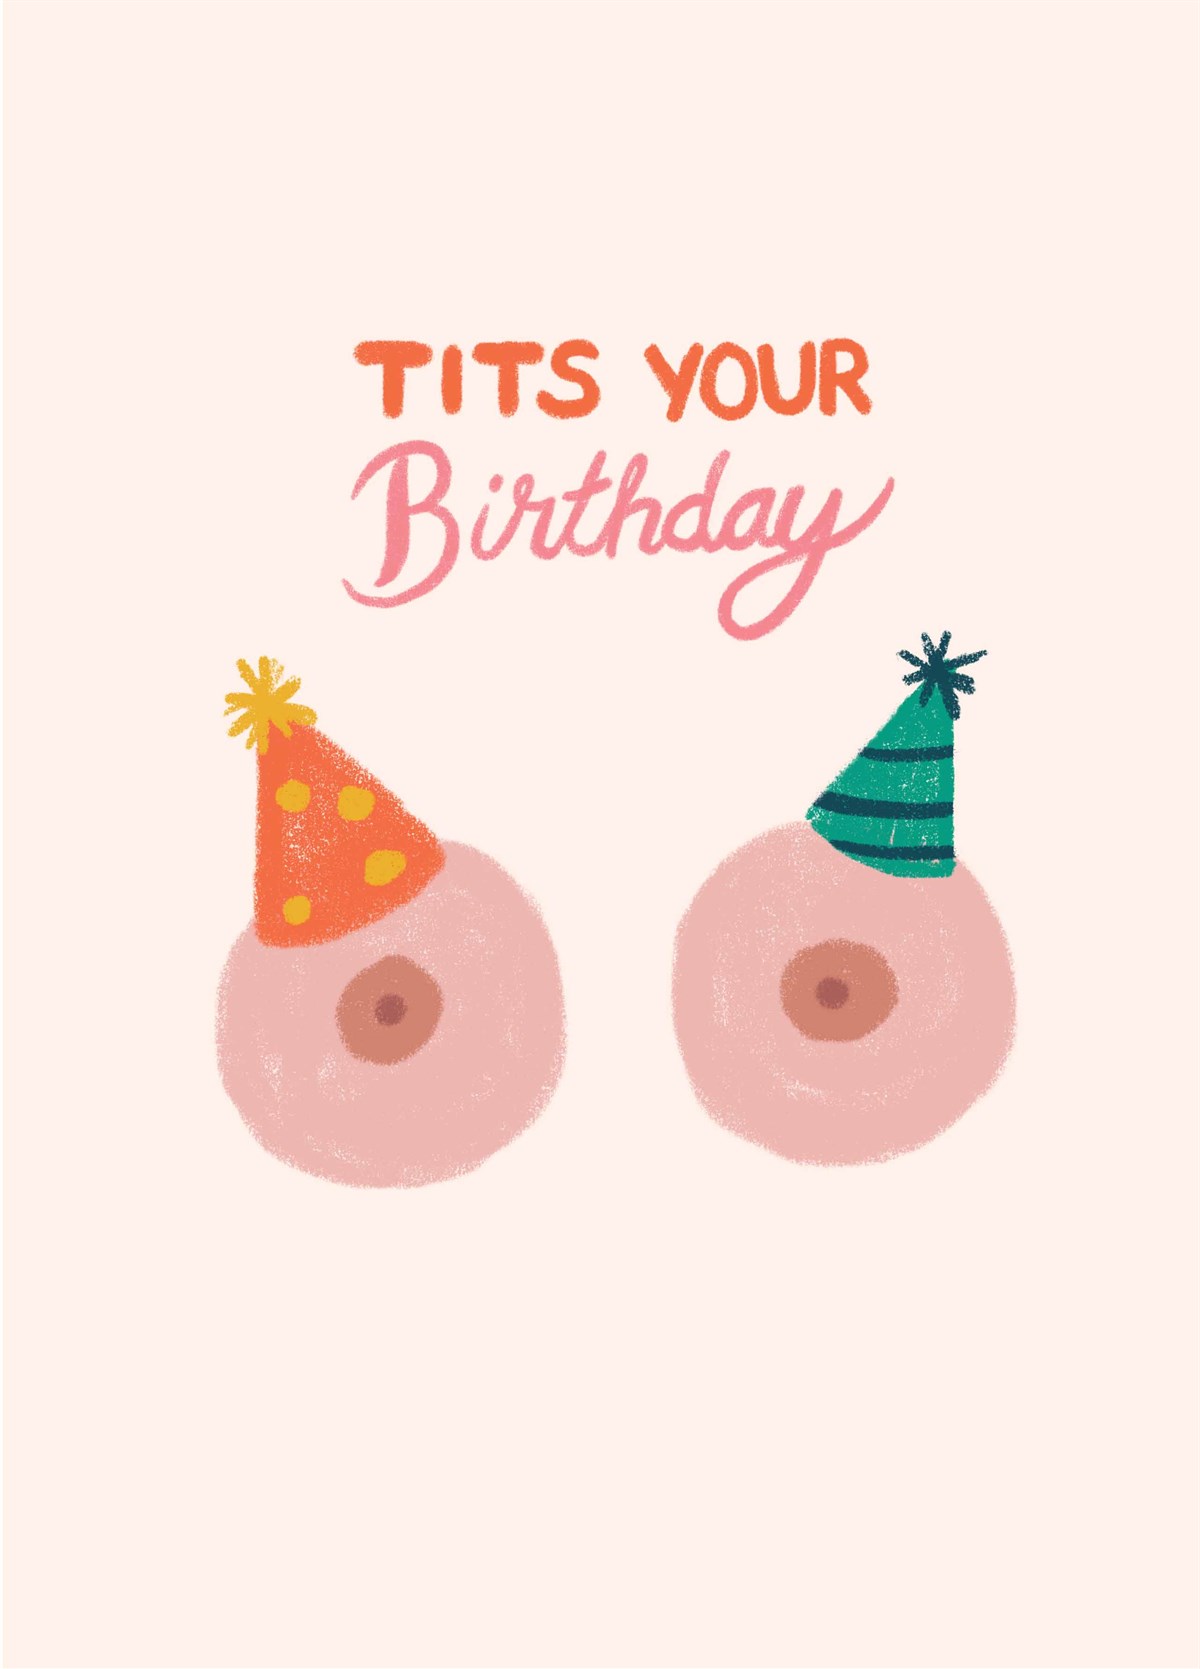 Birthday tits